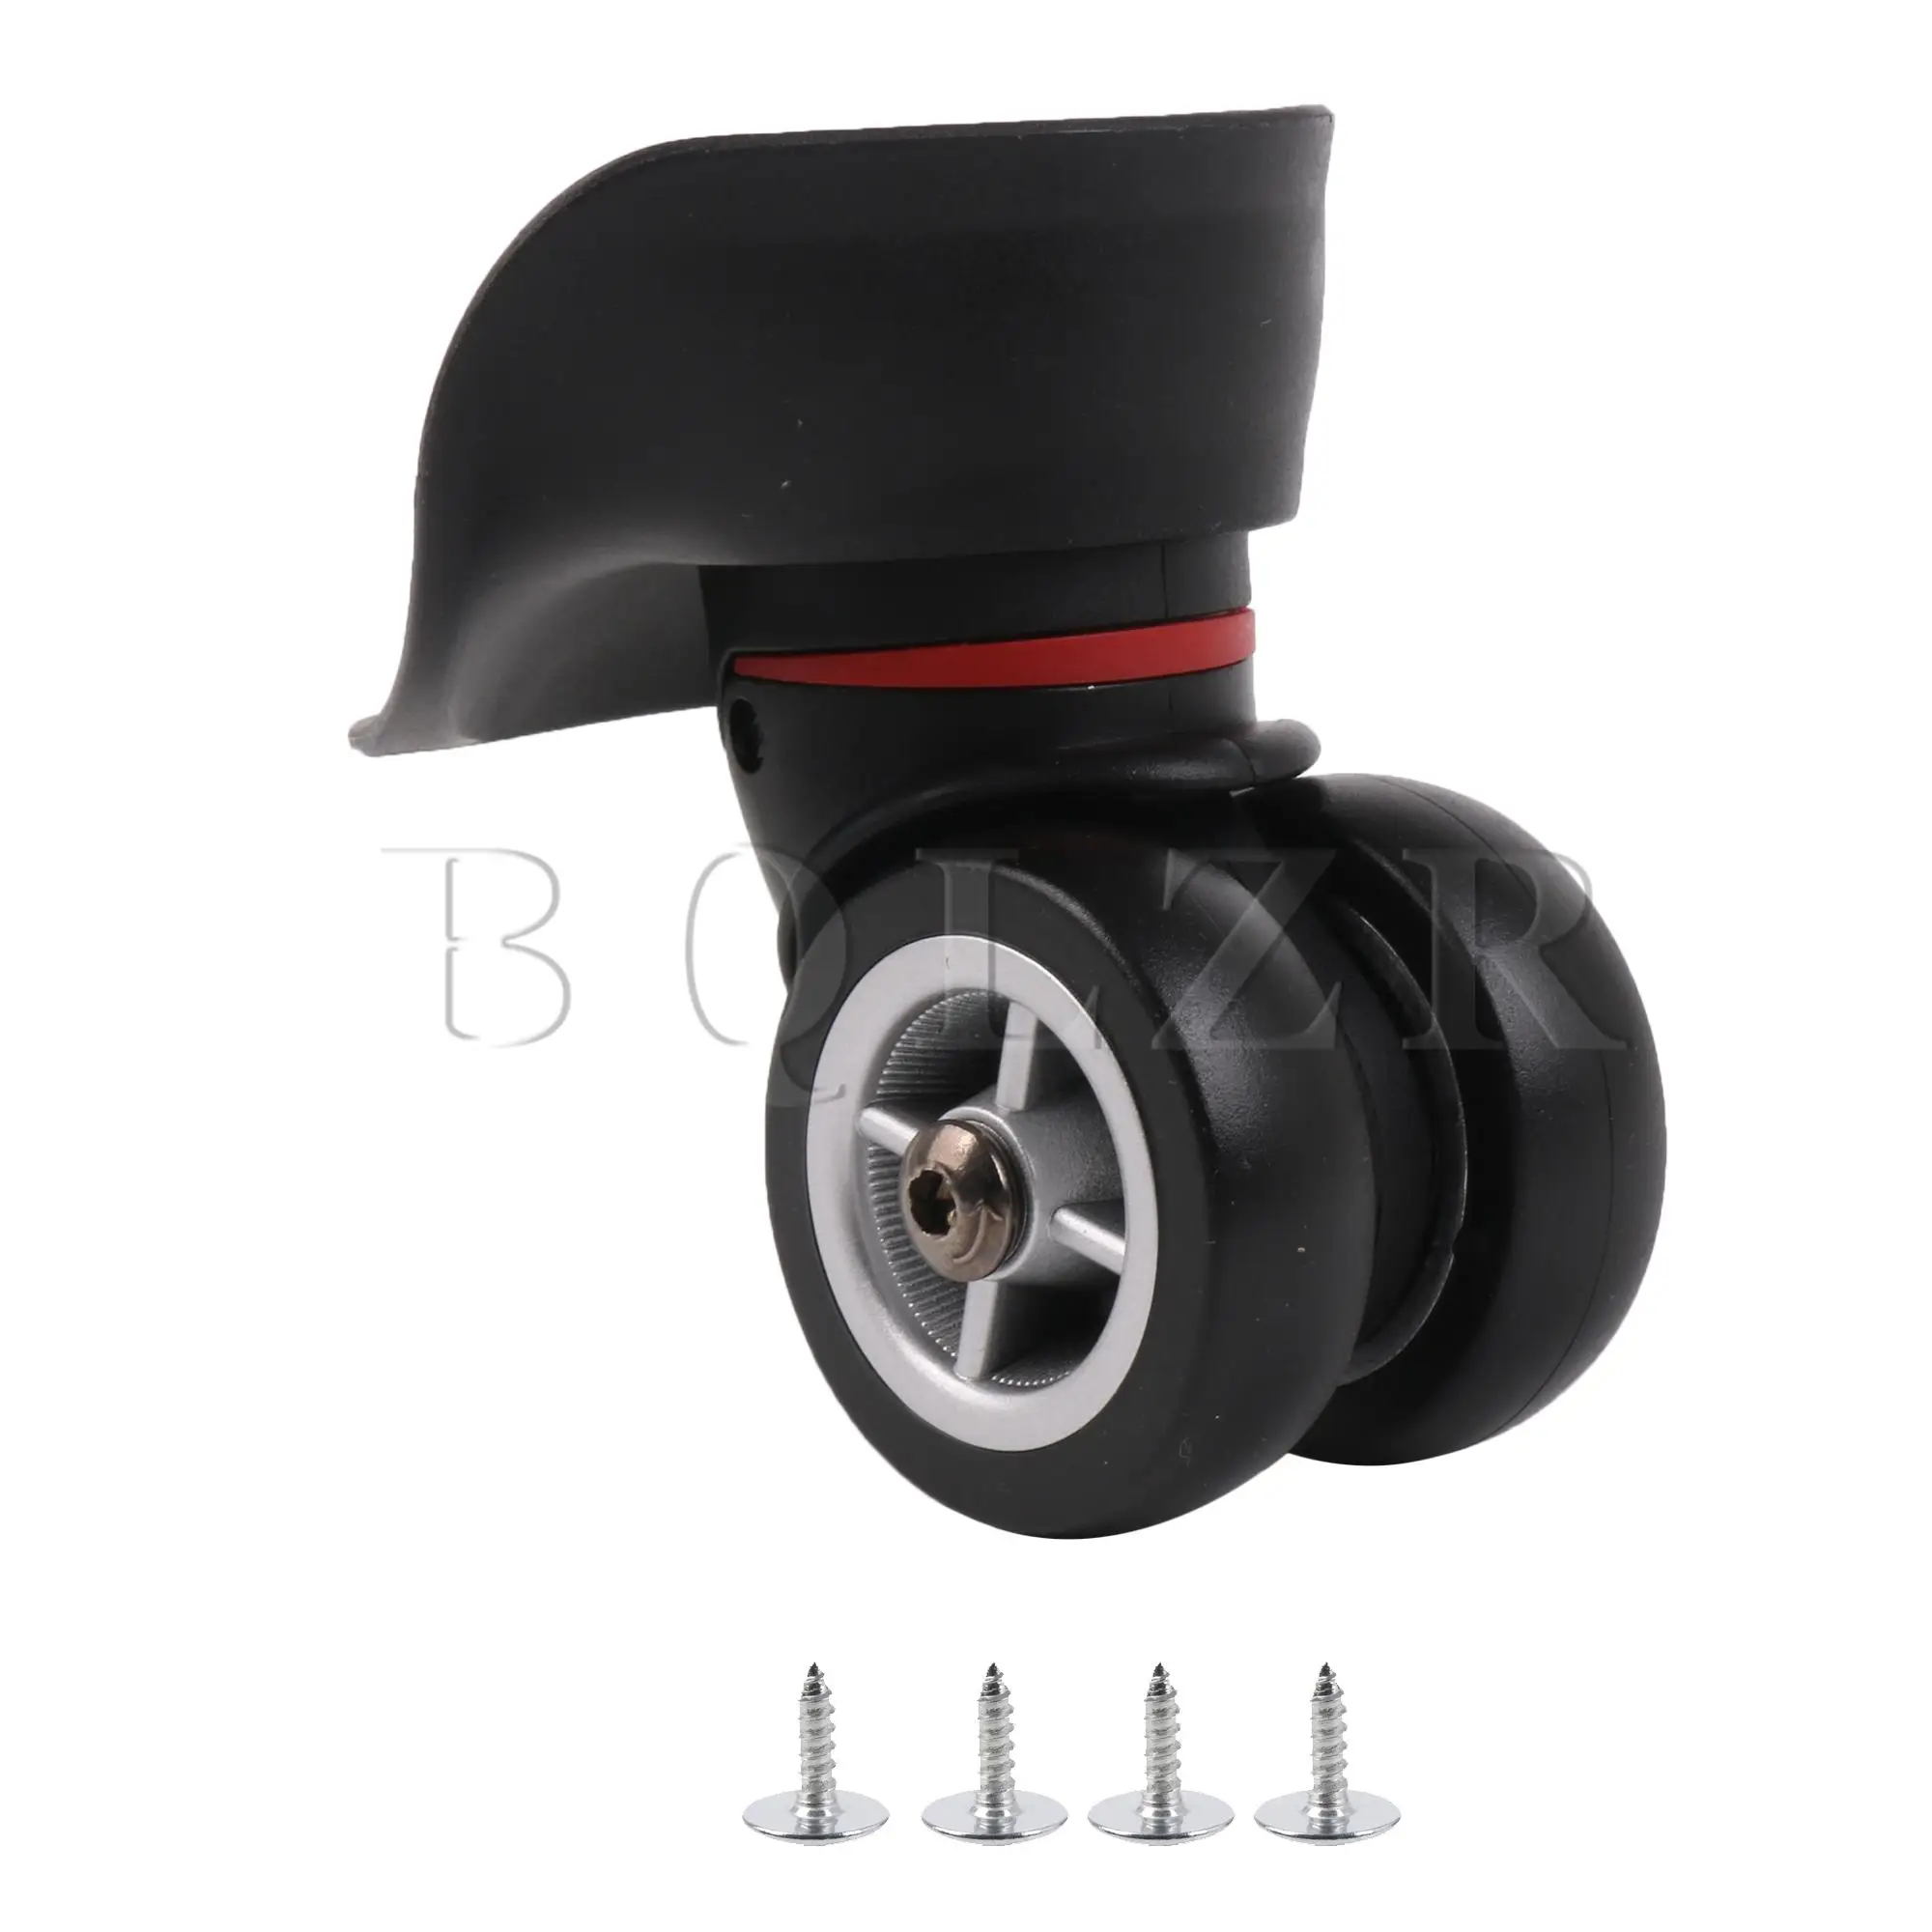 

BQLZR Black Luggage Wheel Replacement 3.94" Height W042 Right w/ Screws Kit